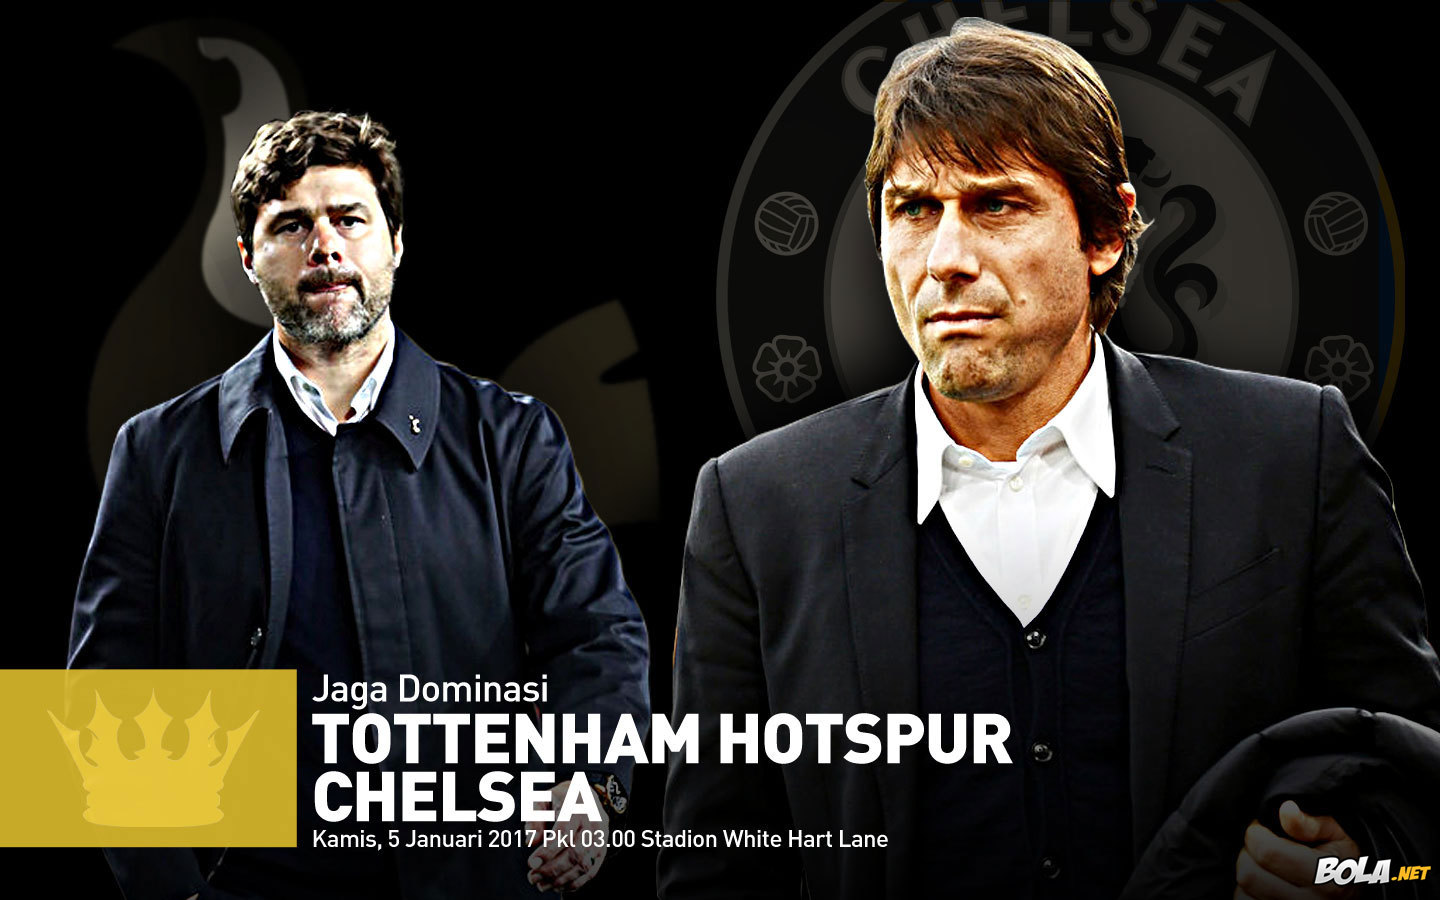 Deskripsi : Wallpaper Tottenham Hotspur Vs Chelsea, size: 1440x900